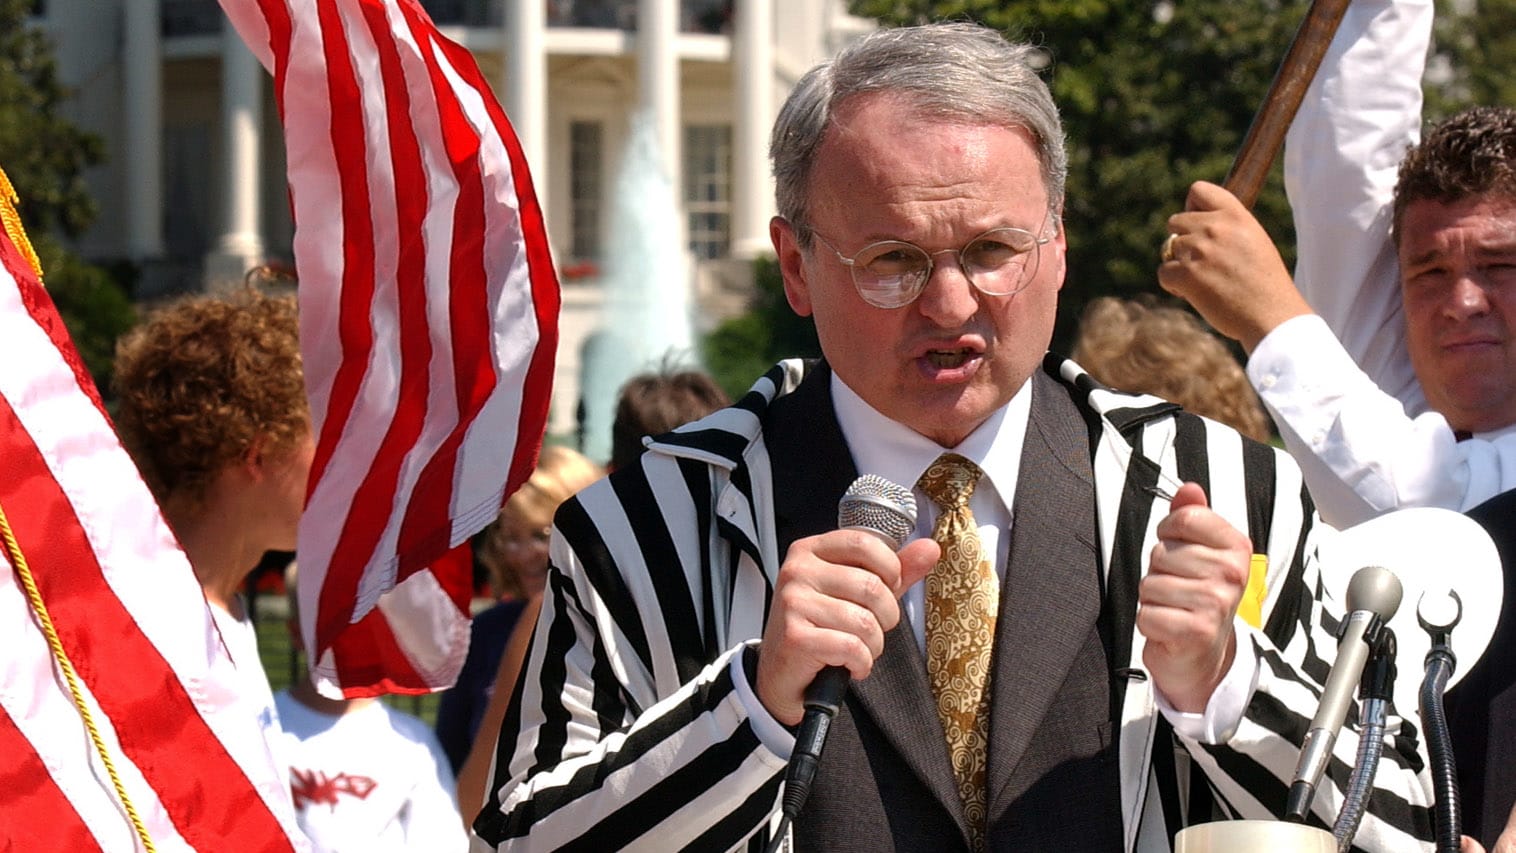 Morton Klein, national president of the Zionist Organization of America